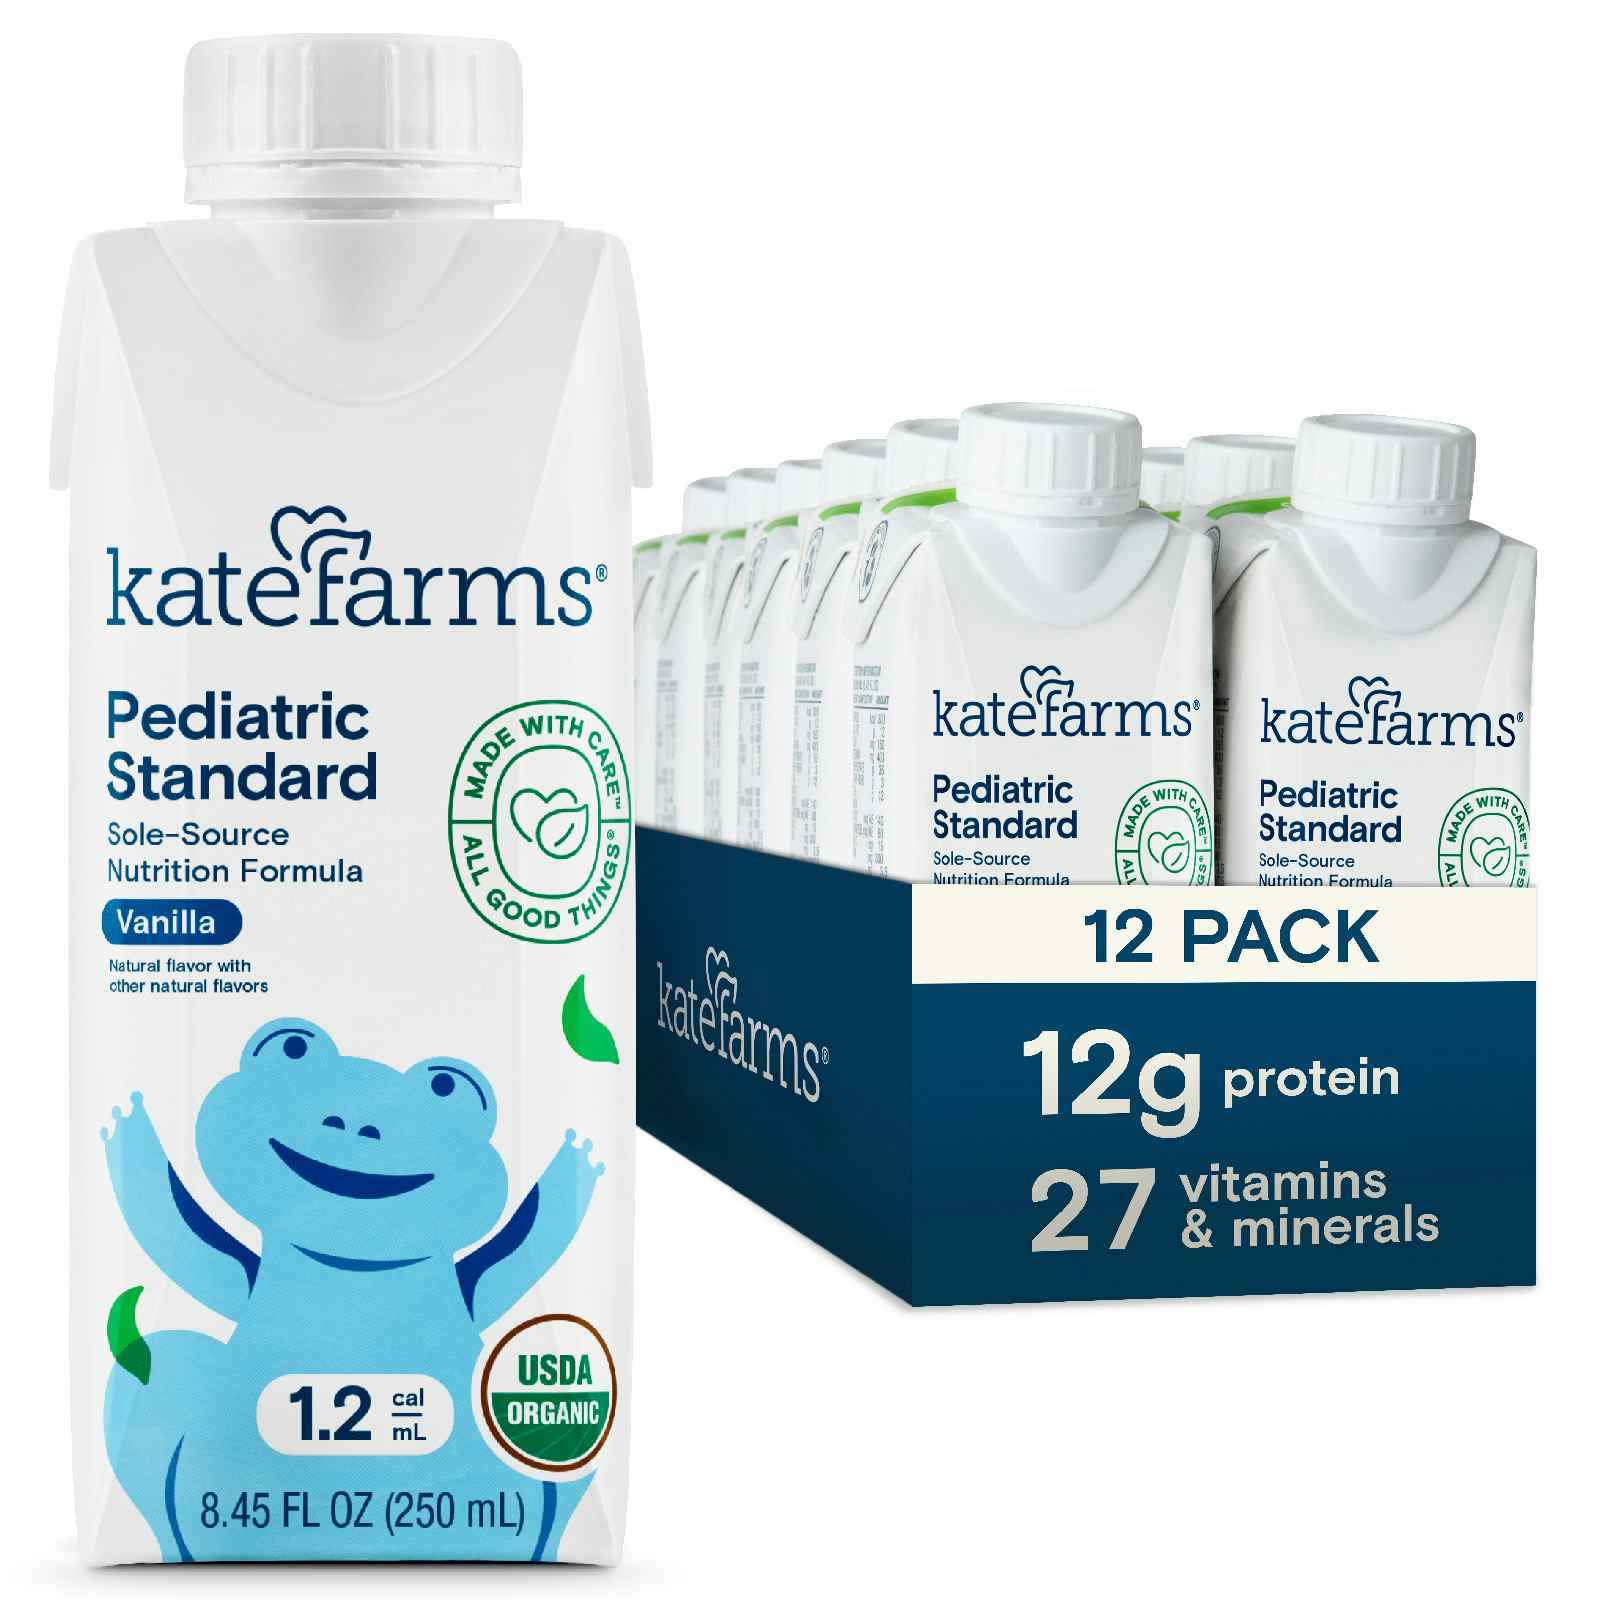 Kate Farms Pediatric Standard 1.2 Sole-Source Nutrition Formula, 8.45 oz.